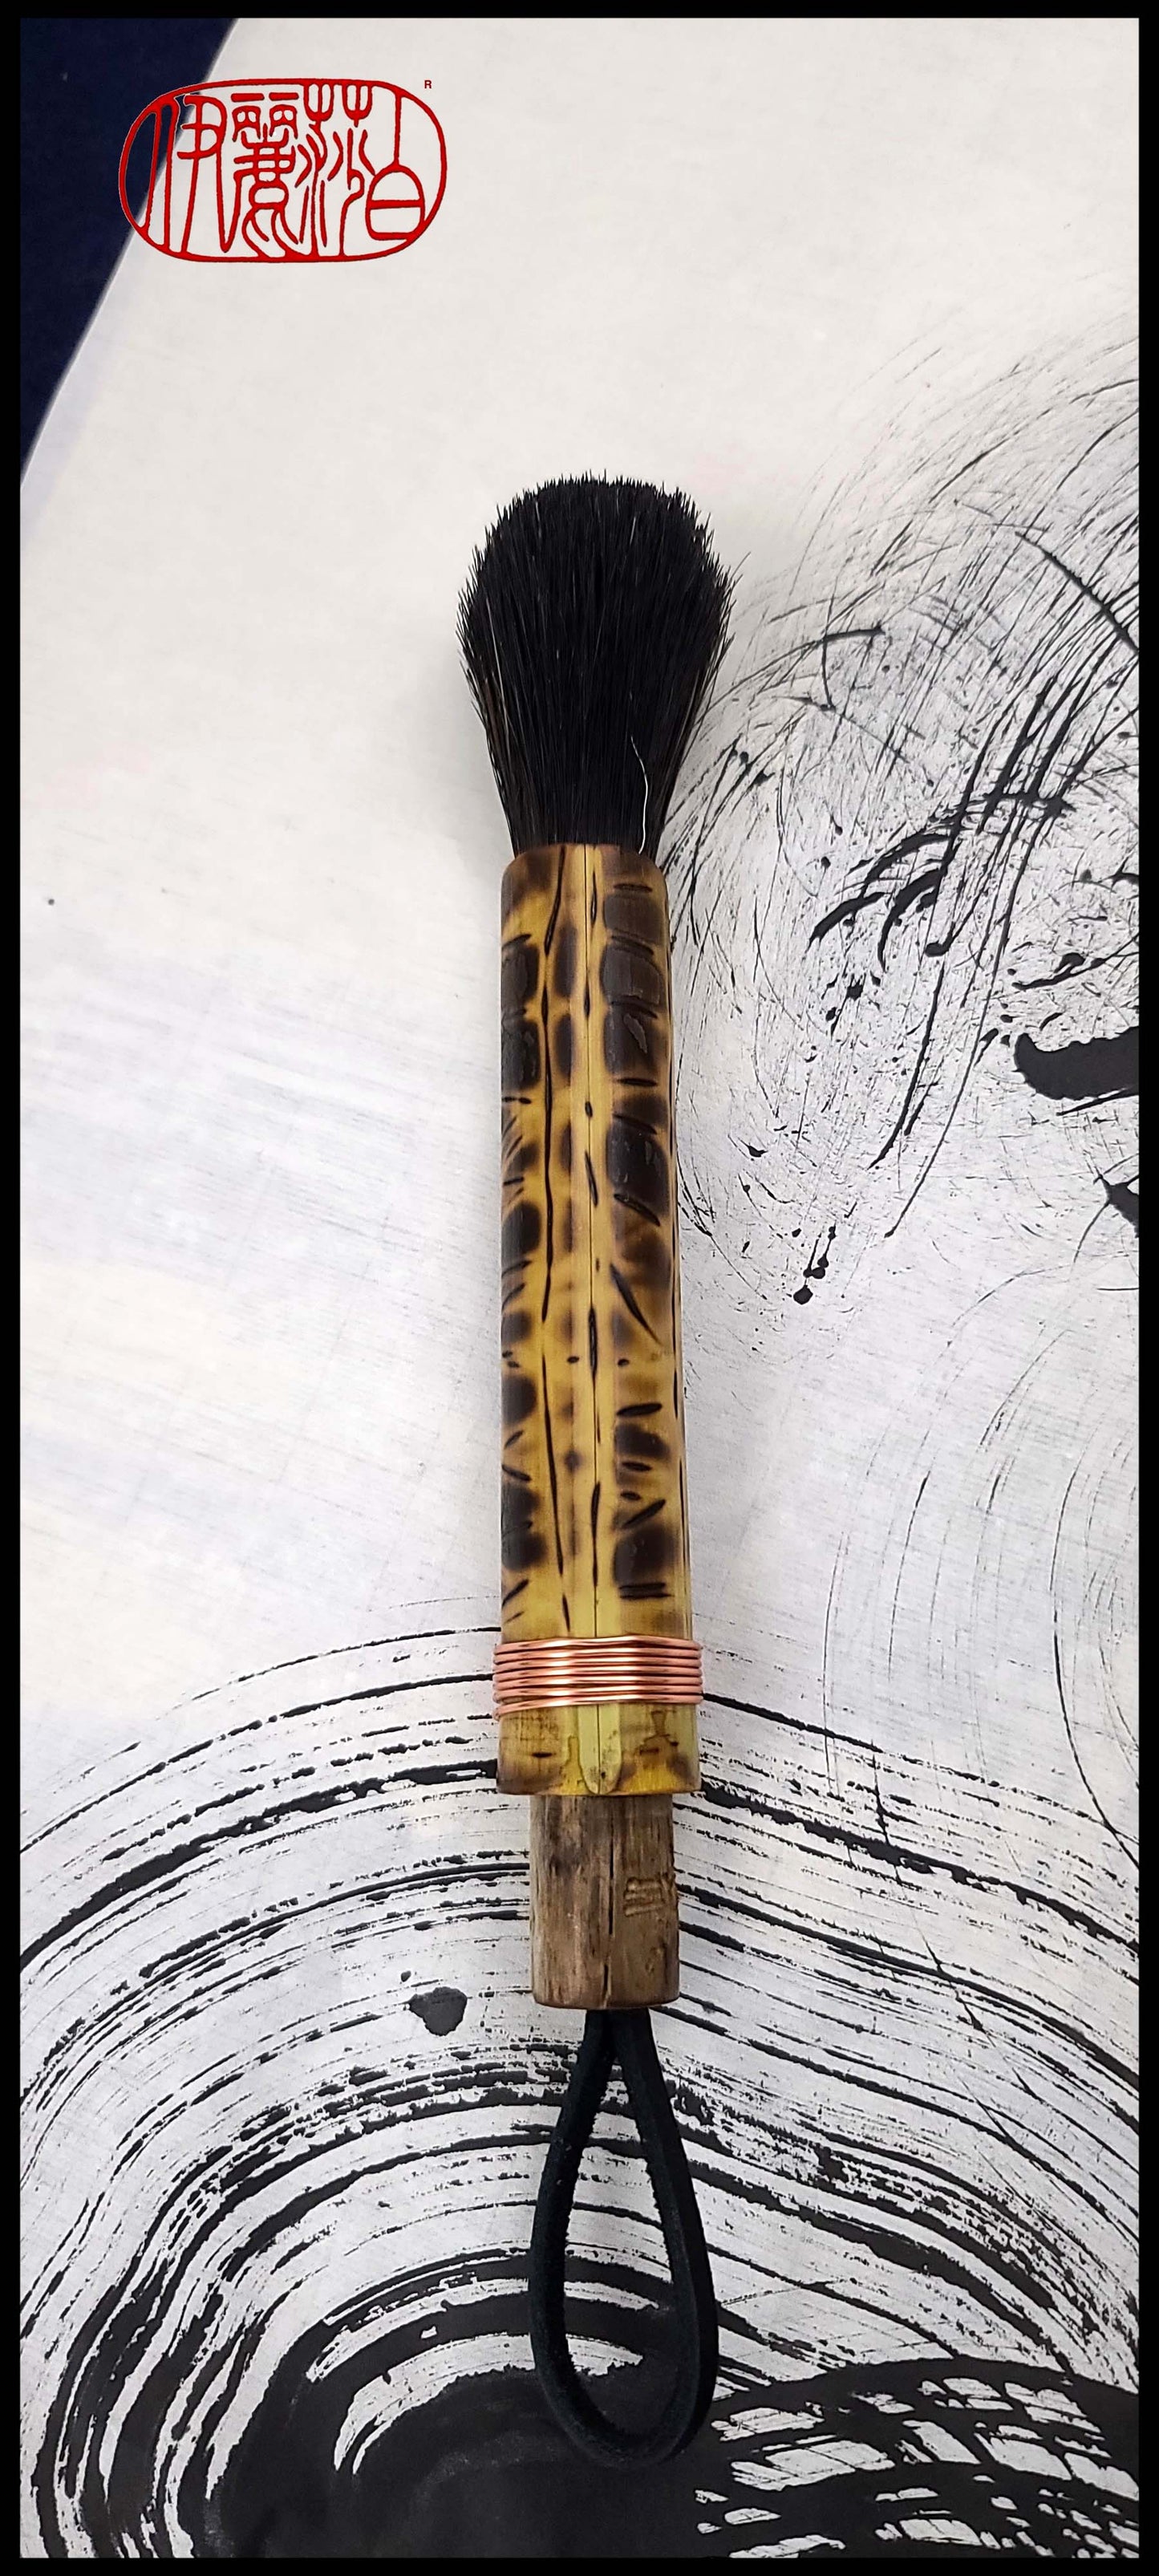 Black Horsehair Paint Brush with Bamboo Handle Art Supplies Elizabeth Schowachert Art